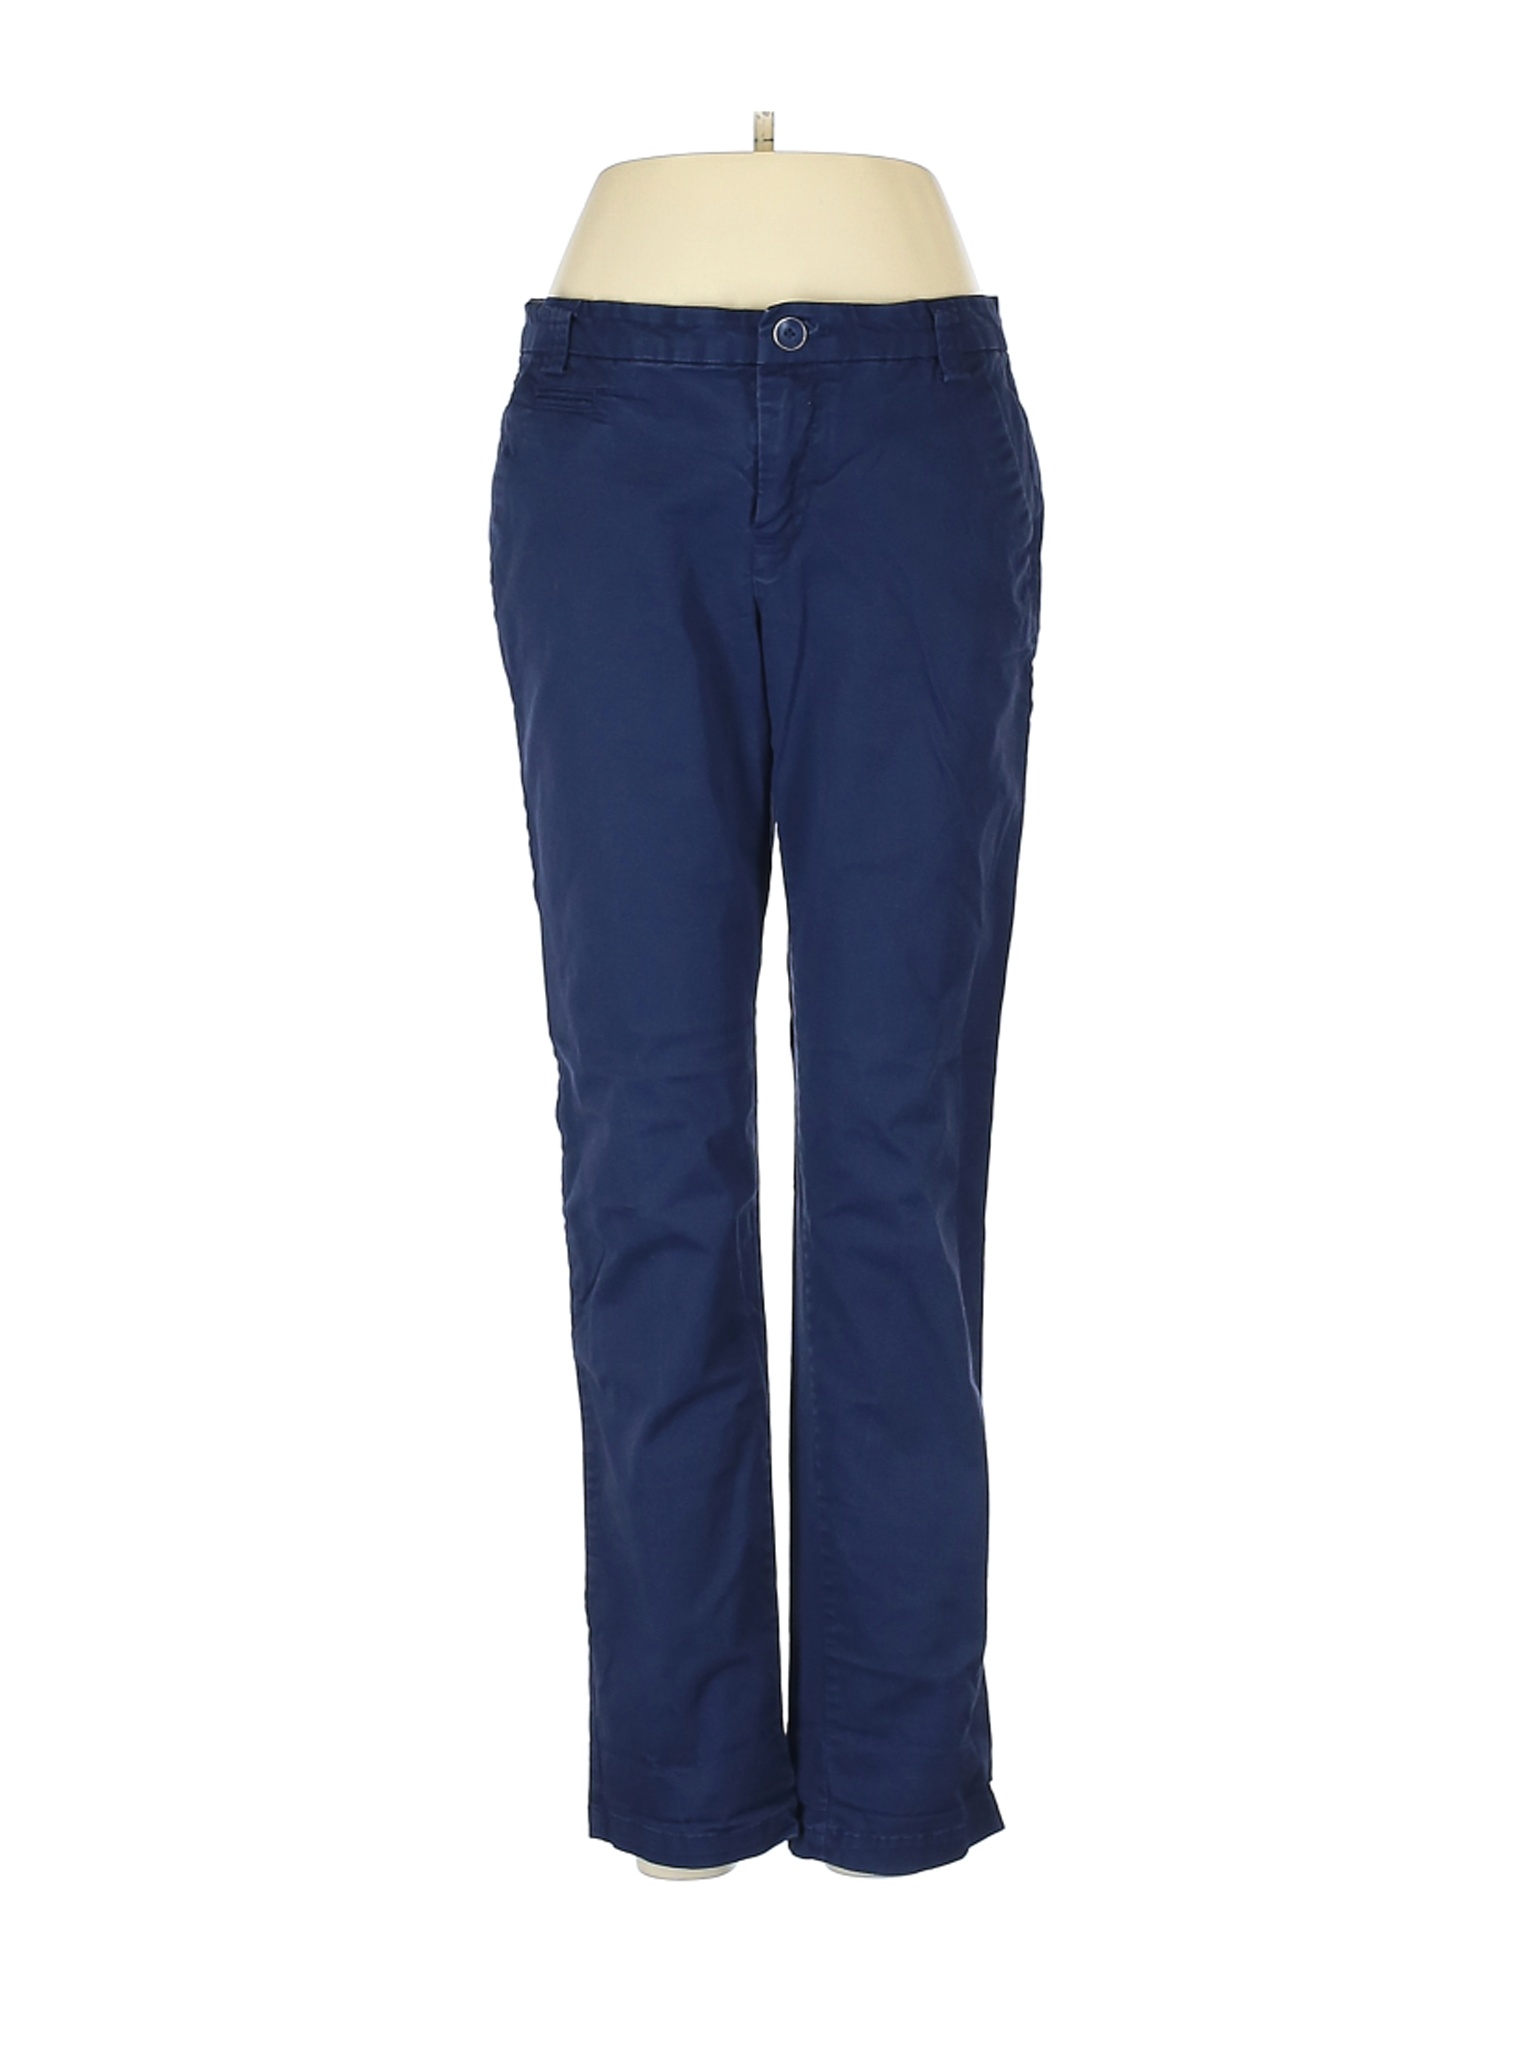 Khakis & Co Women Blue Dress Pants 4 | eBay